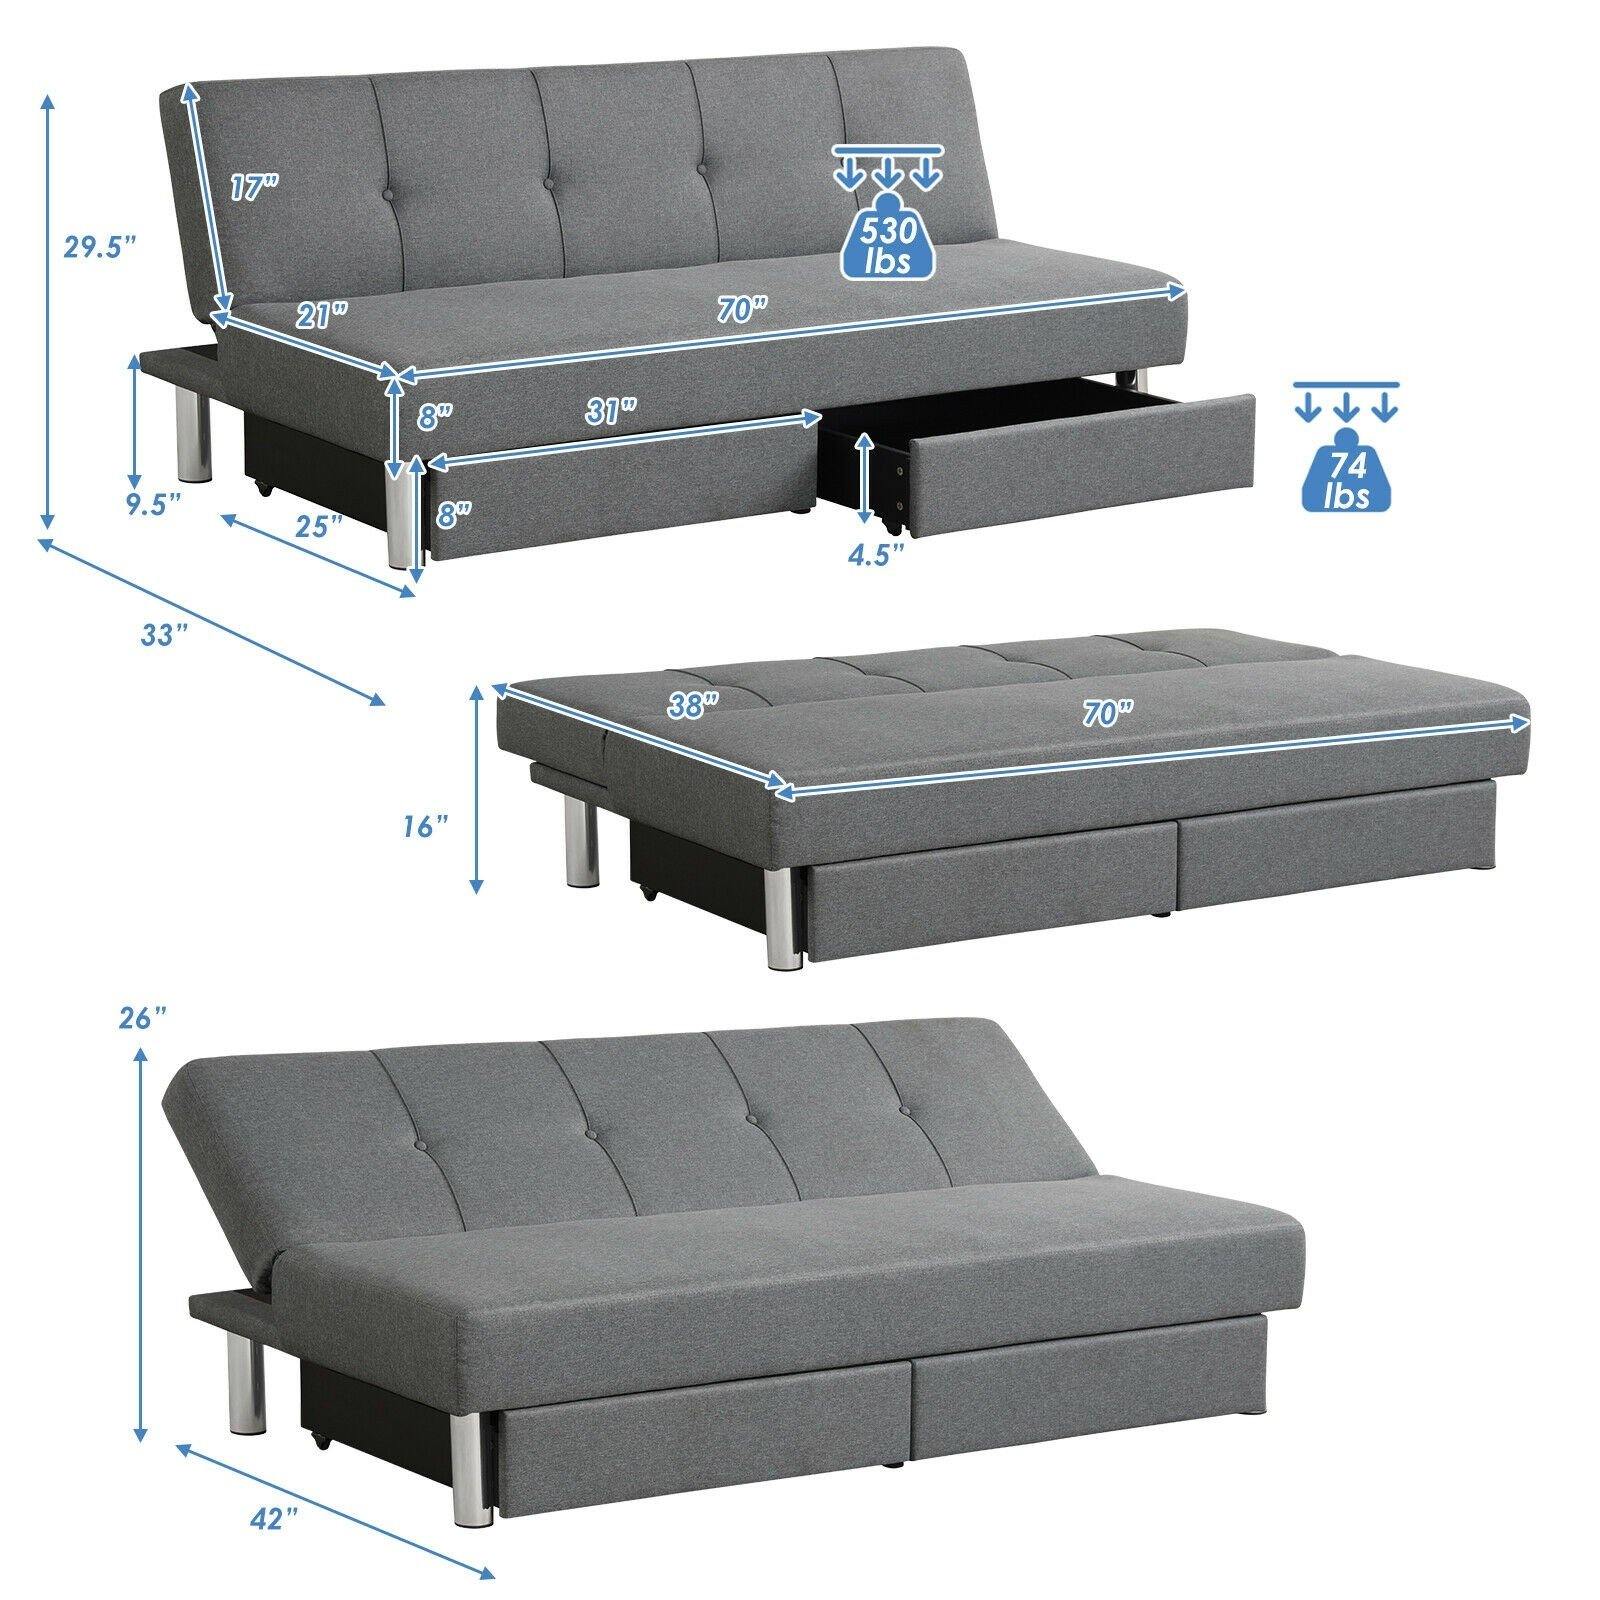 3-Seat Convertible Sofa Bed,Long Sofa w/ 2 Large Drawers, Ergonomic Sleeper w/ 3 Adjustable Angles - Giantexus